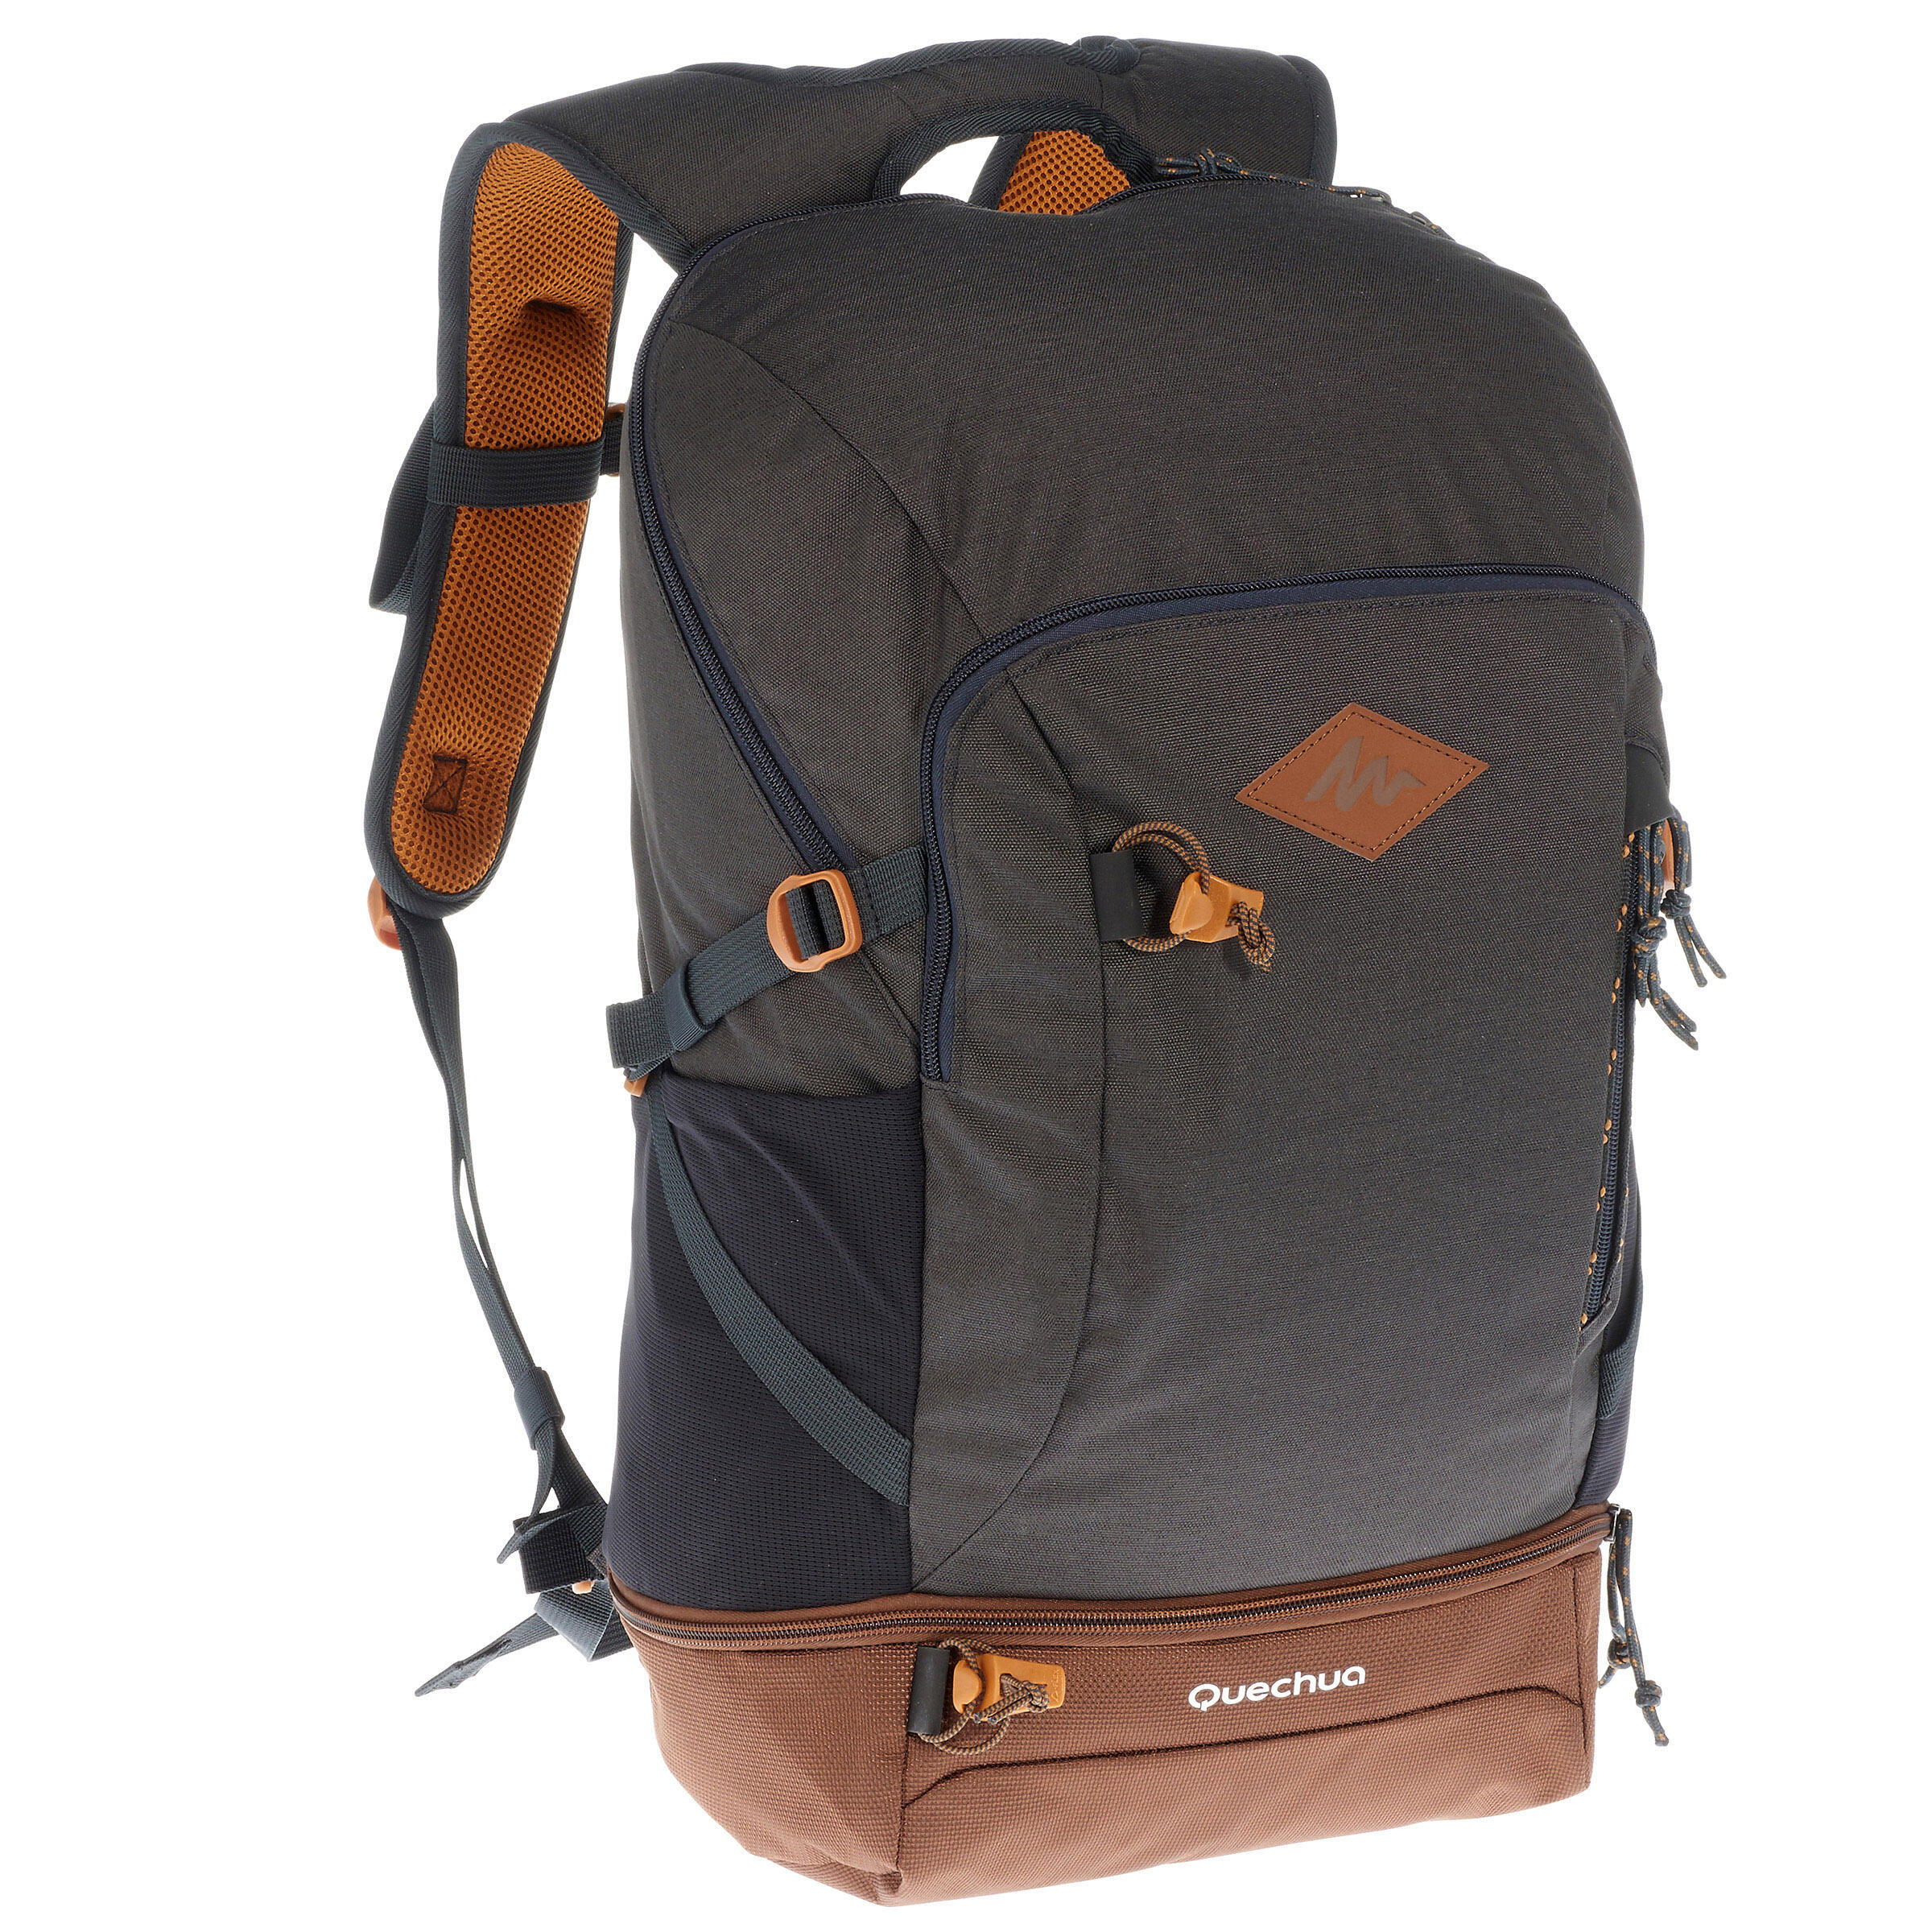 MH500 30-litre Hiking Backpack - Decathlon